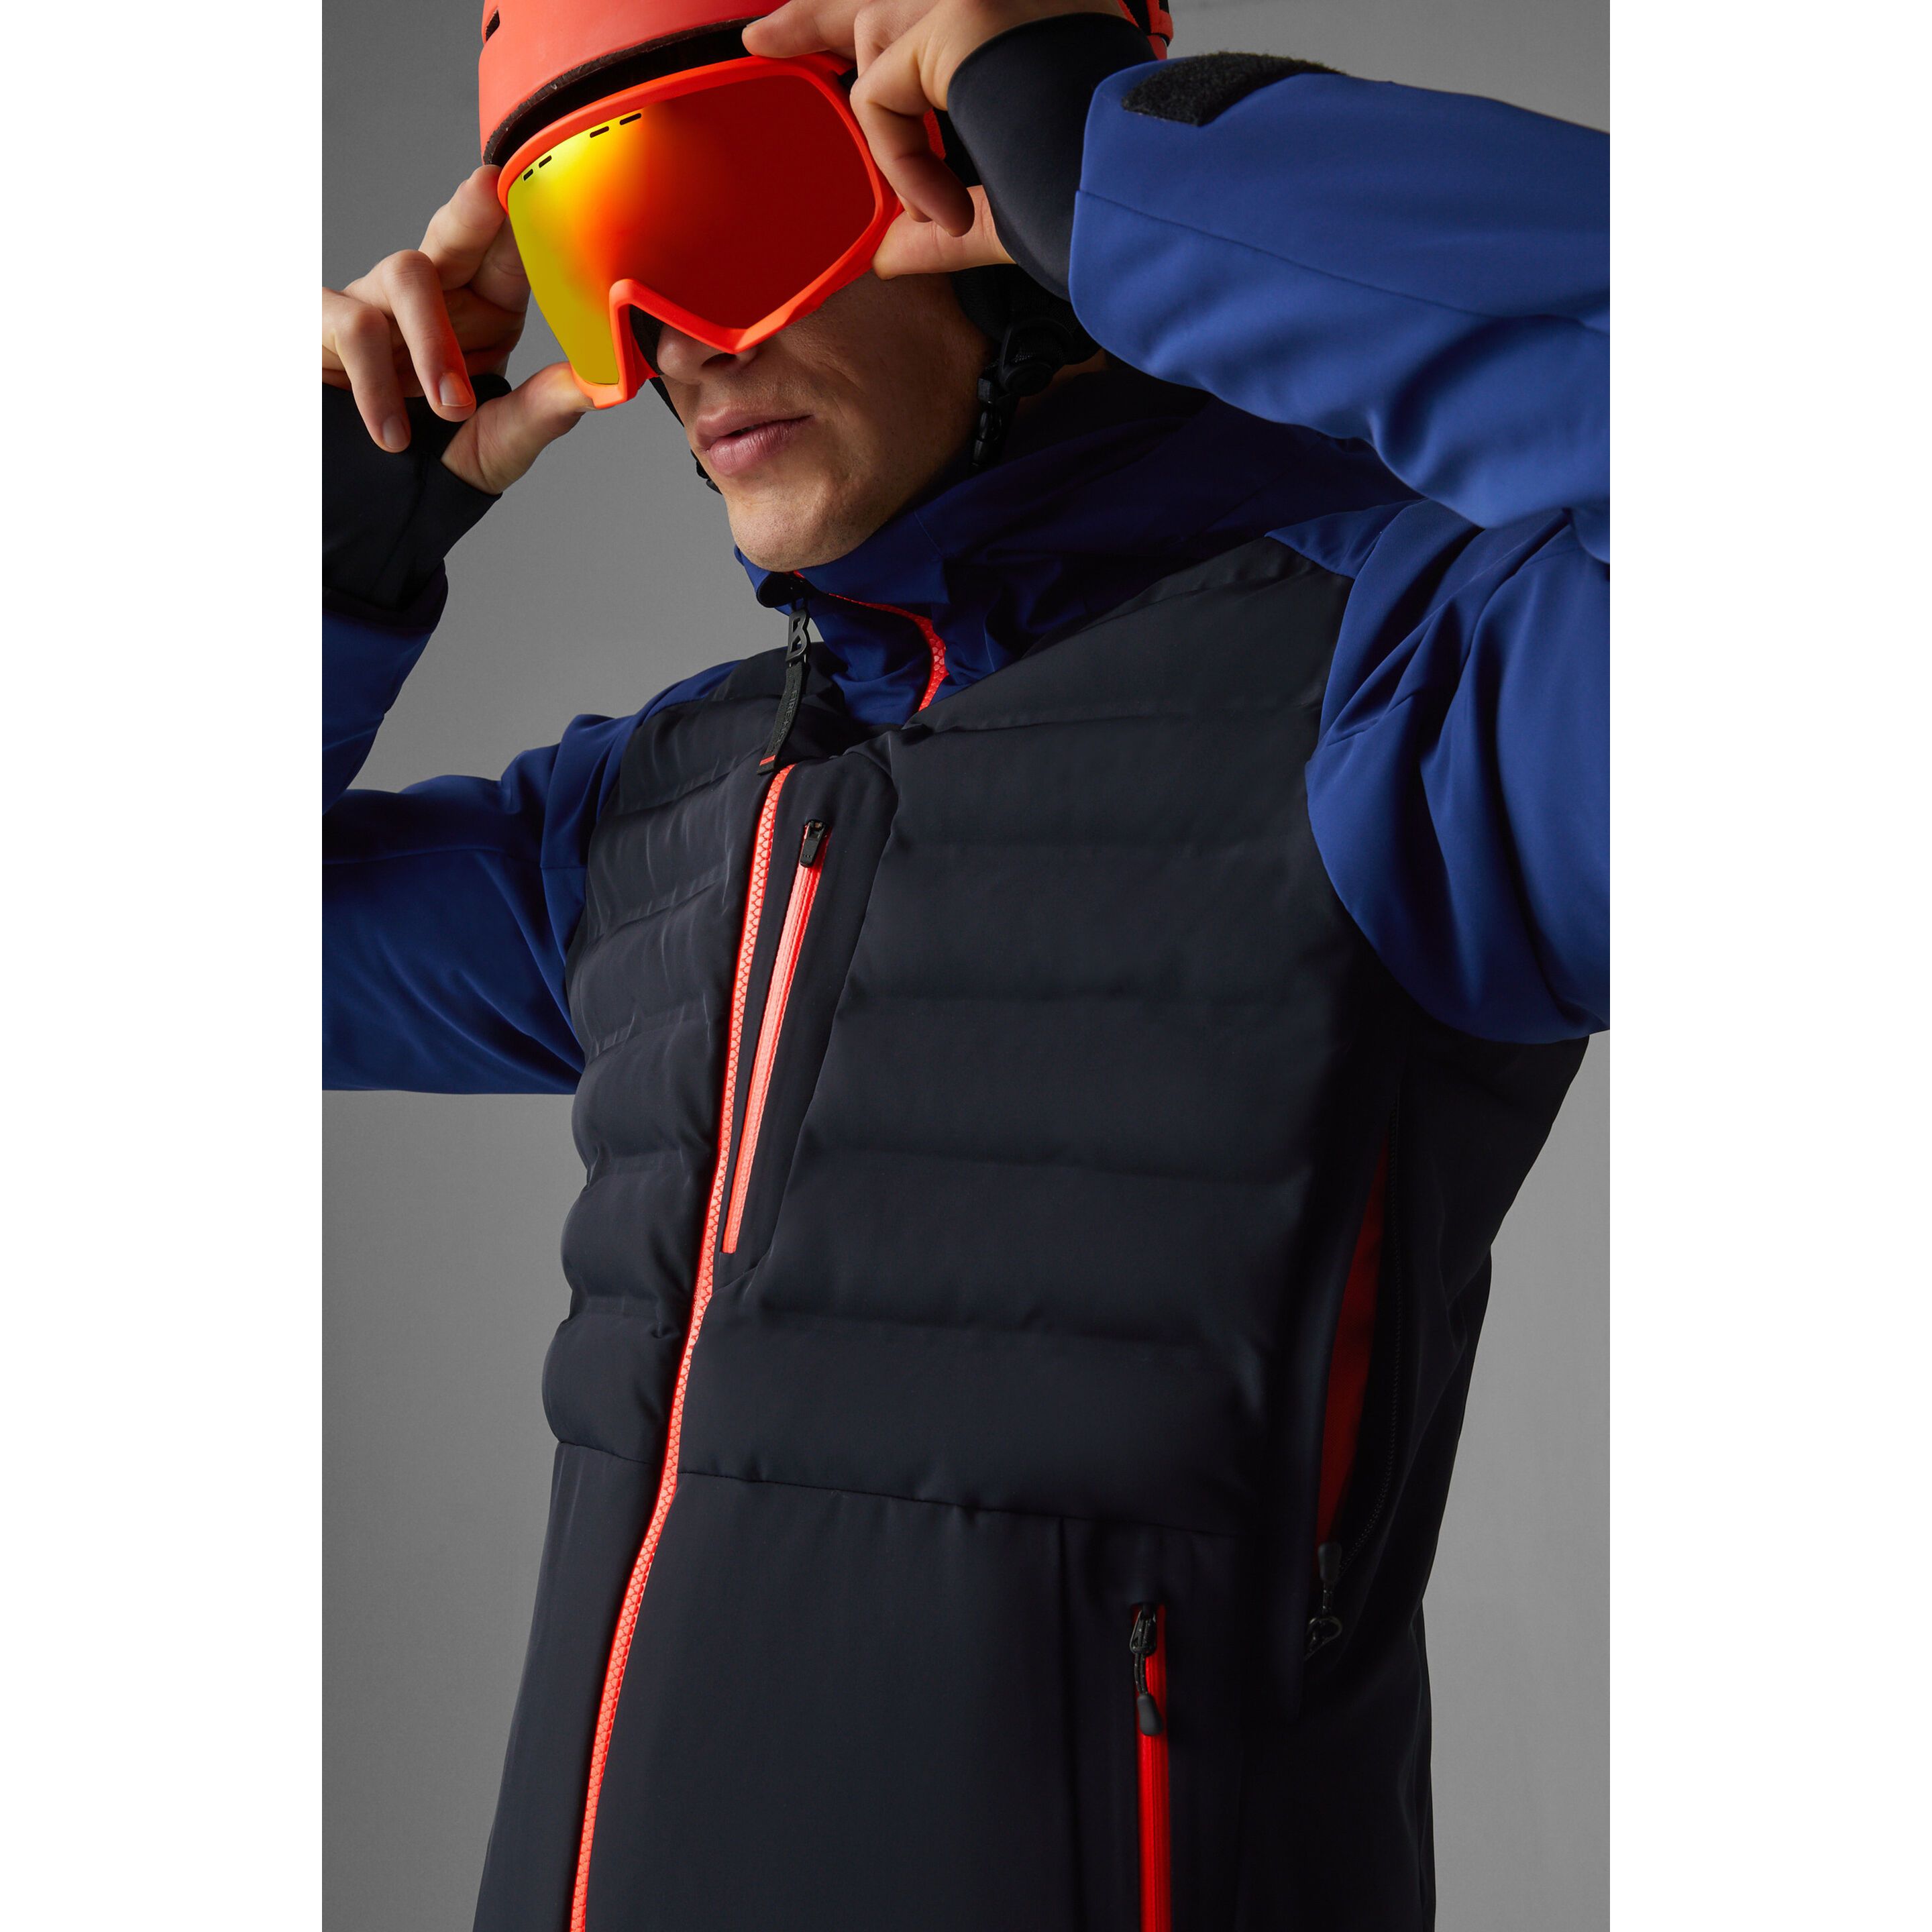 Geci Ski & Snow -  bogner fire and ice IVO Ski Jacket